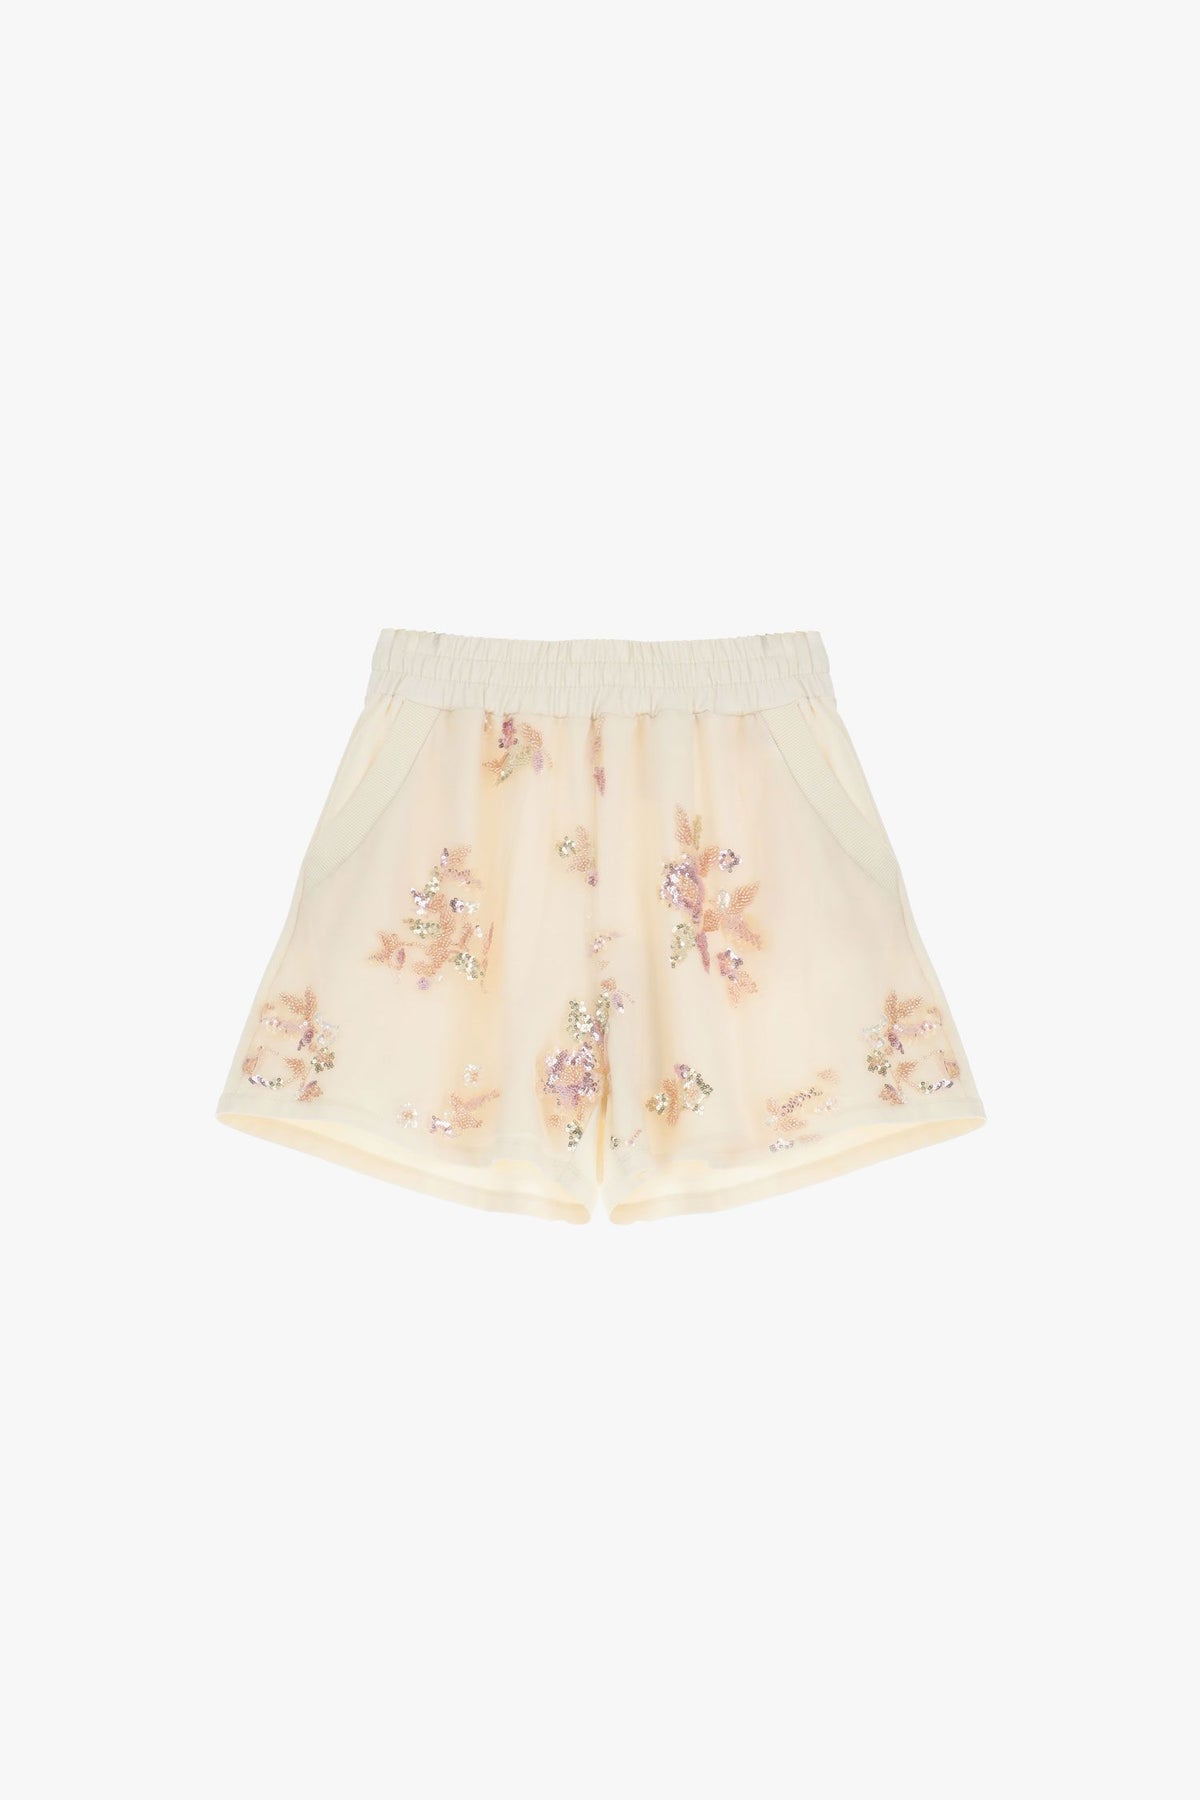 Sequin Floral Shorts